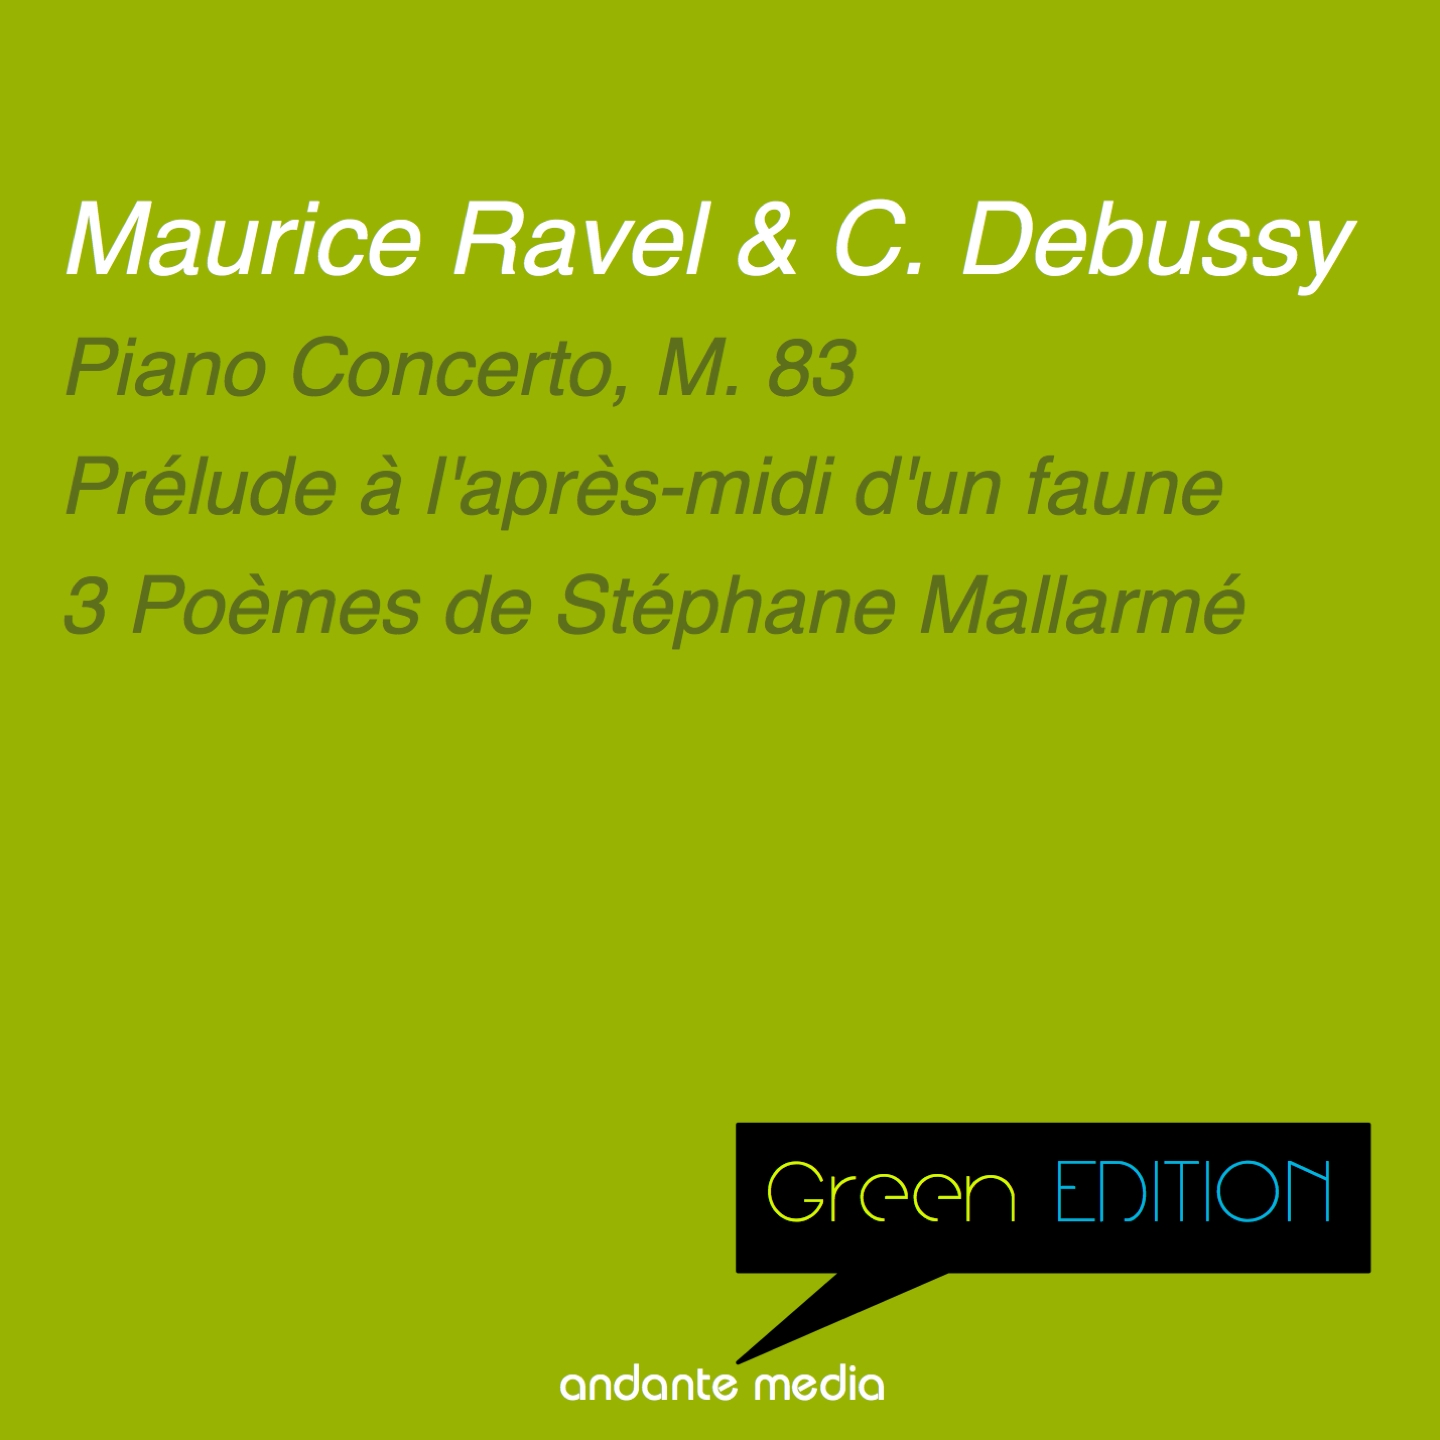 Green Edition  Ravel  Debussy: Piano Concerto, M. 83  3 Poe mes de Ste phane Mallarme